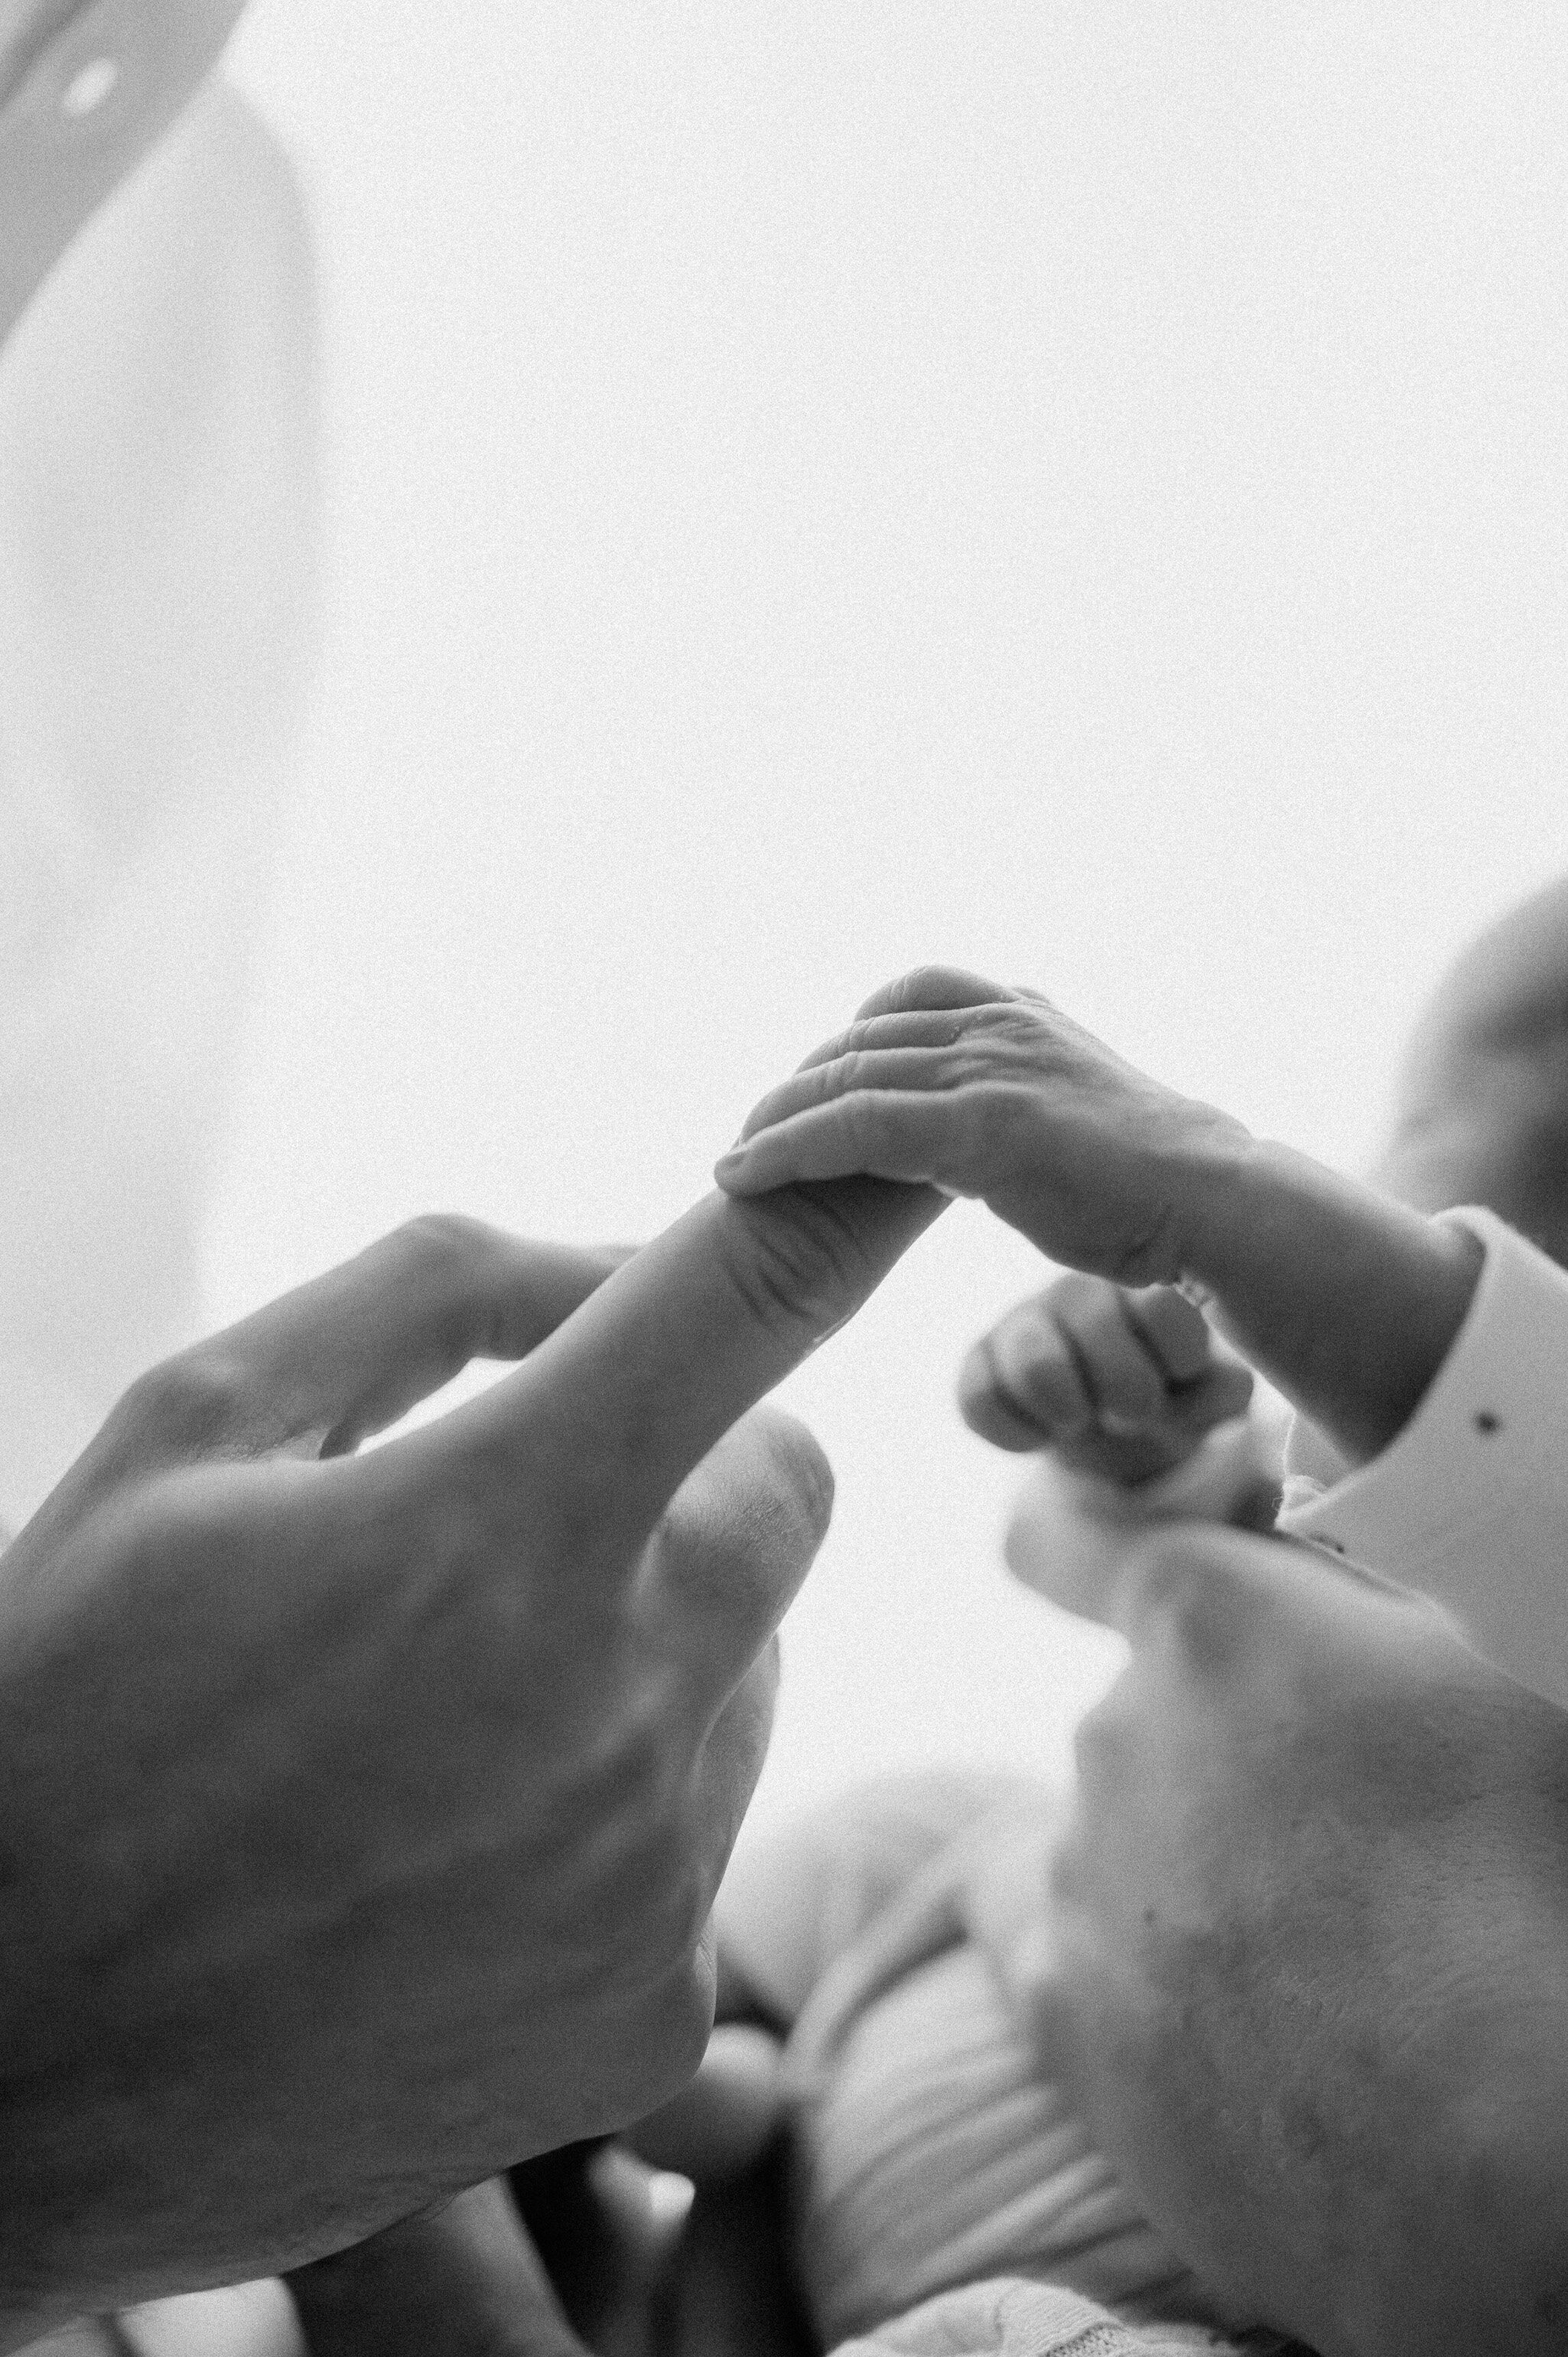 newborn baby hands taken by York photographer near Leeds, Harrogate and Ripon